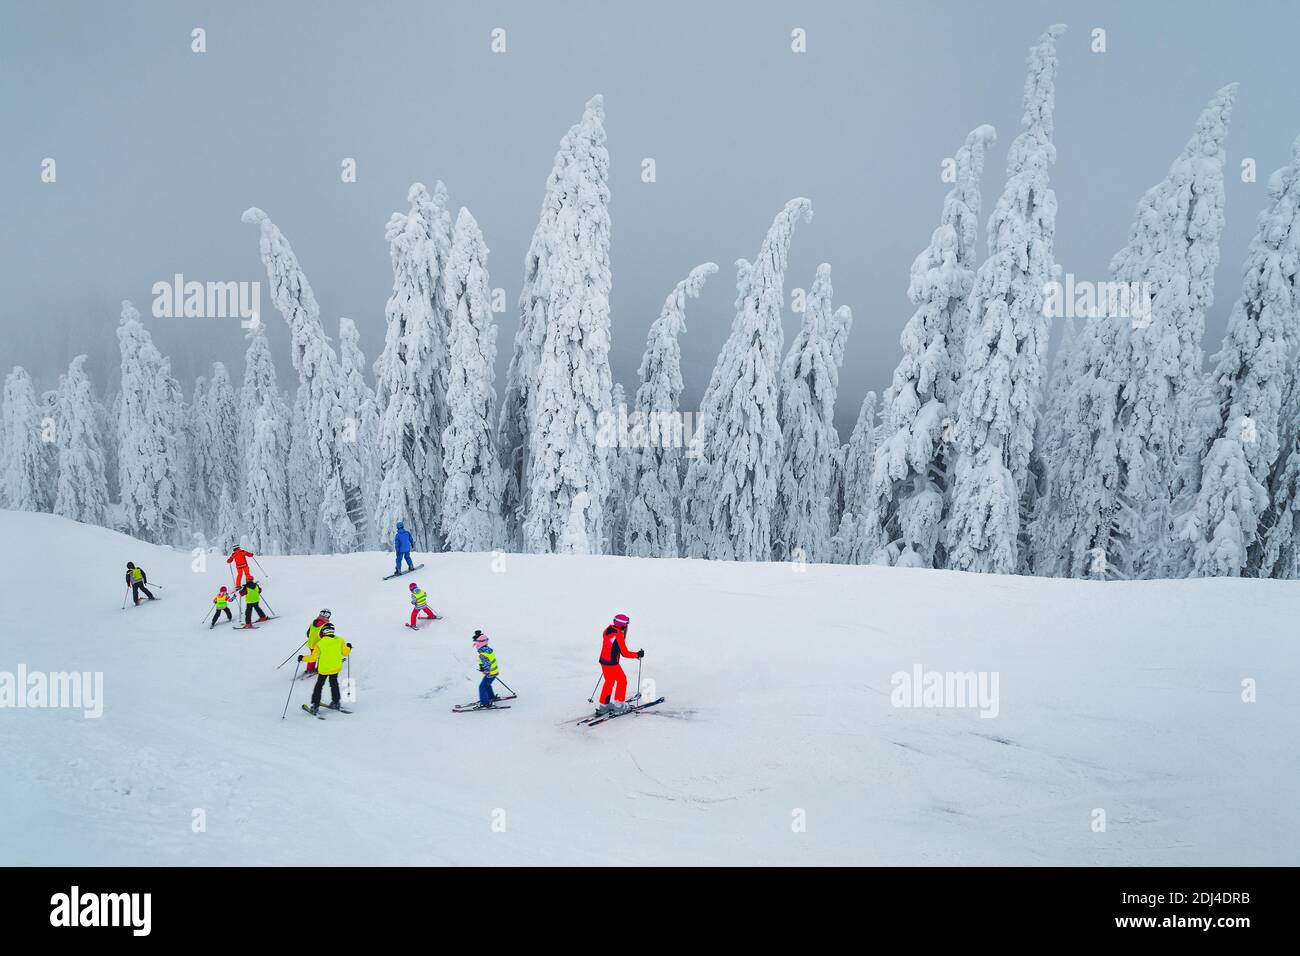 Fabulous snow covered trees and misty winter ski resort. Active kids skiers skiing downhill in famous Poiana Brasov ski resort, Transylvania, Romania, Stock Photo